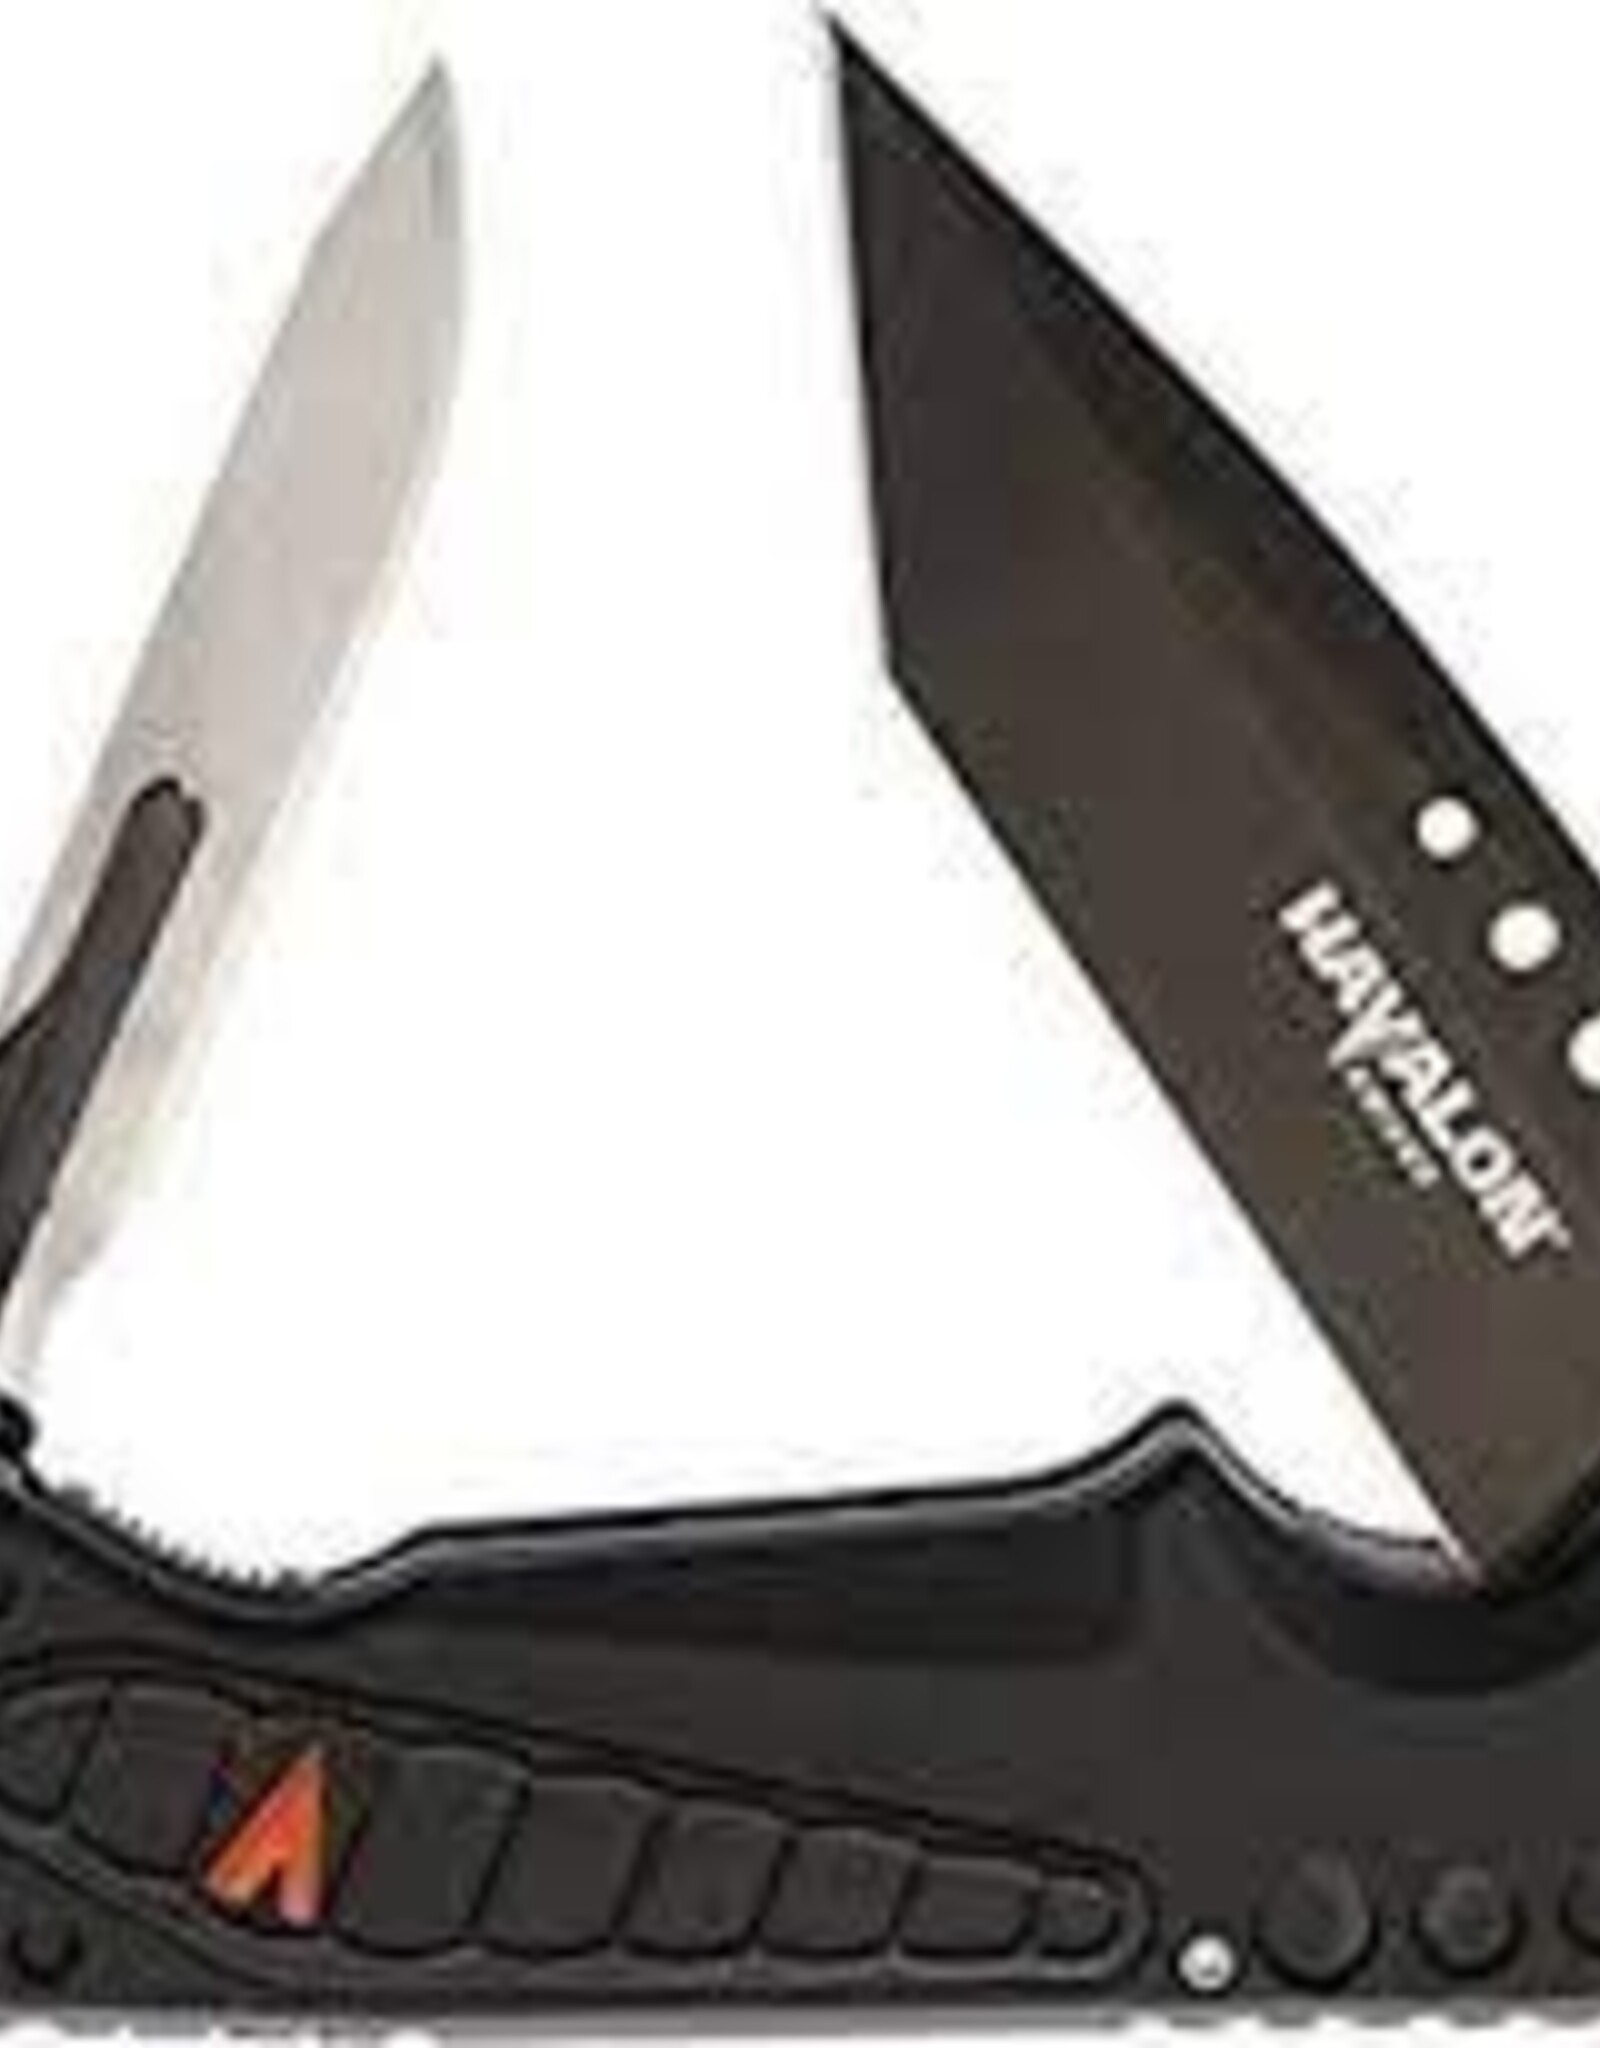 Havalon EXP Knife